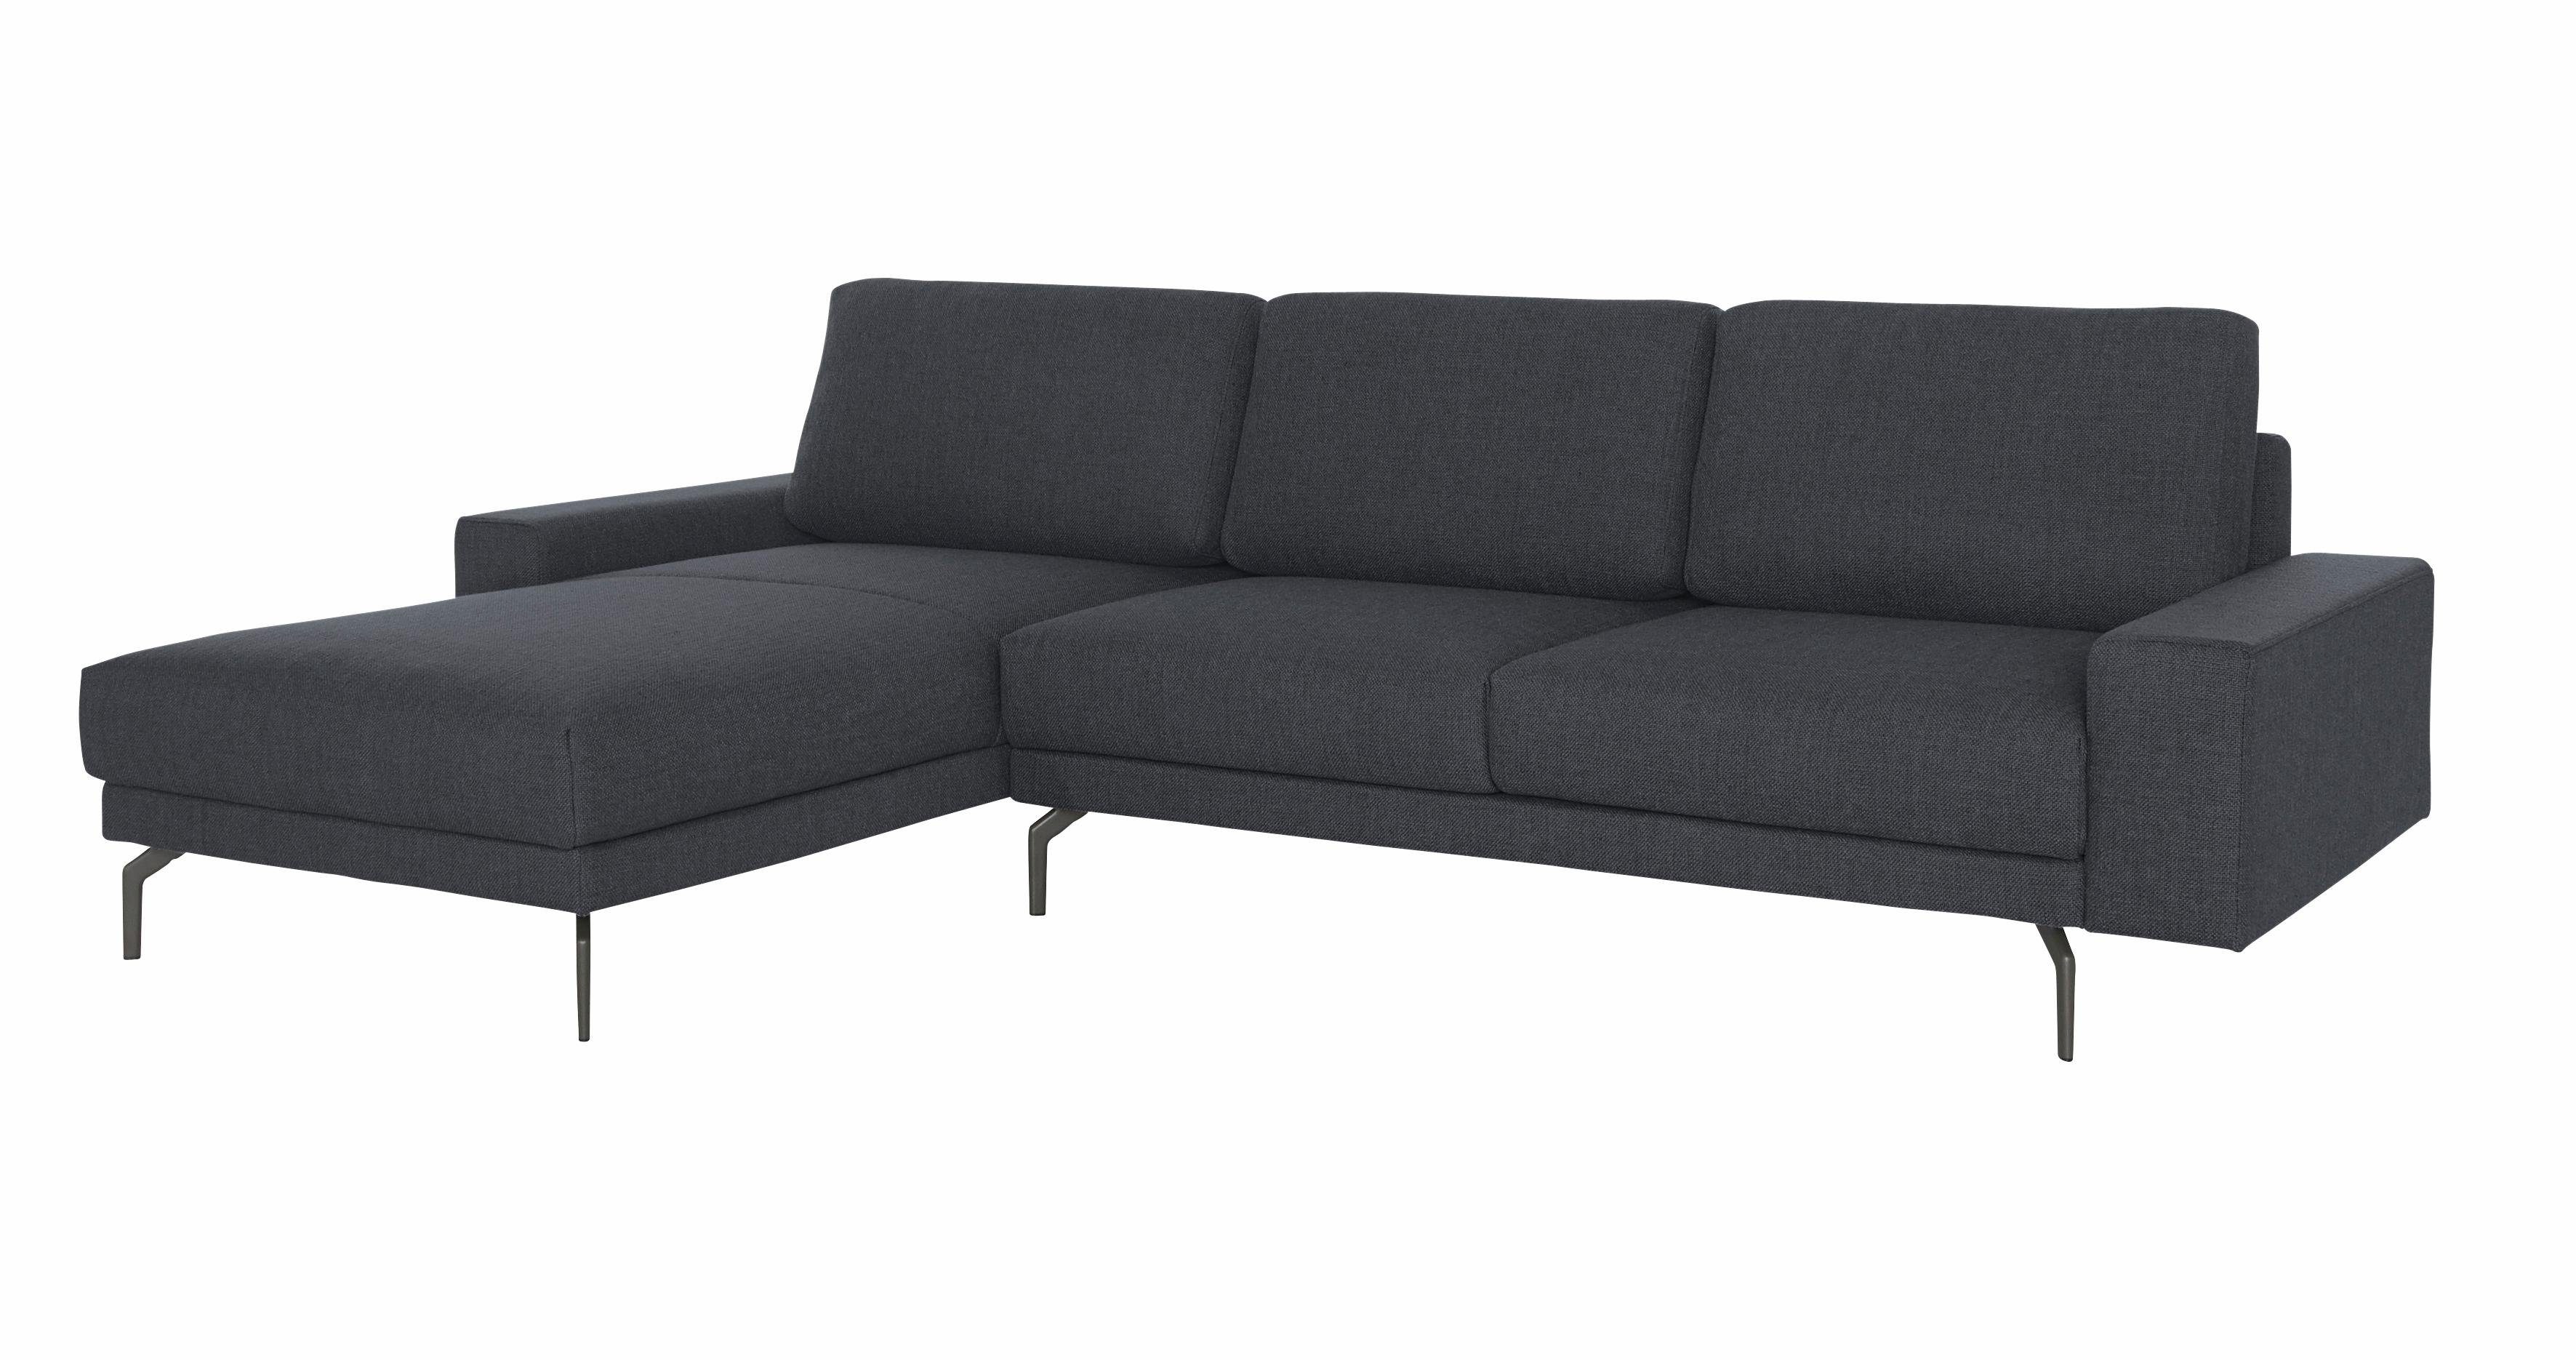 hülsta und niedrig, hs.450, Breite breit in umbragrau, sofa Alugussfüße Ecksofa cm Armlehne 294